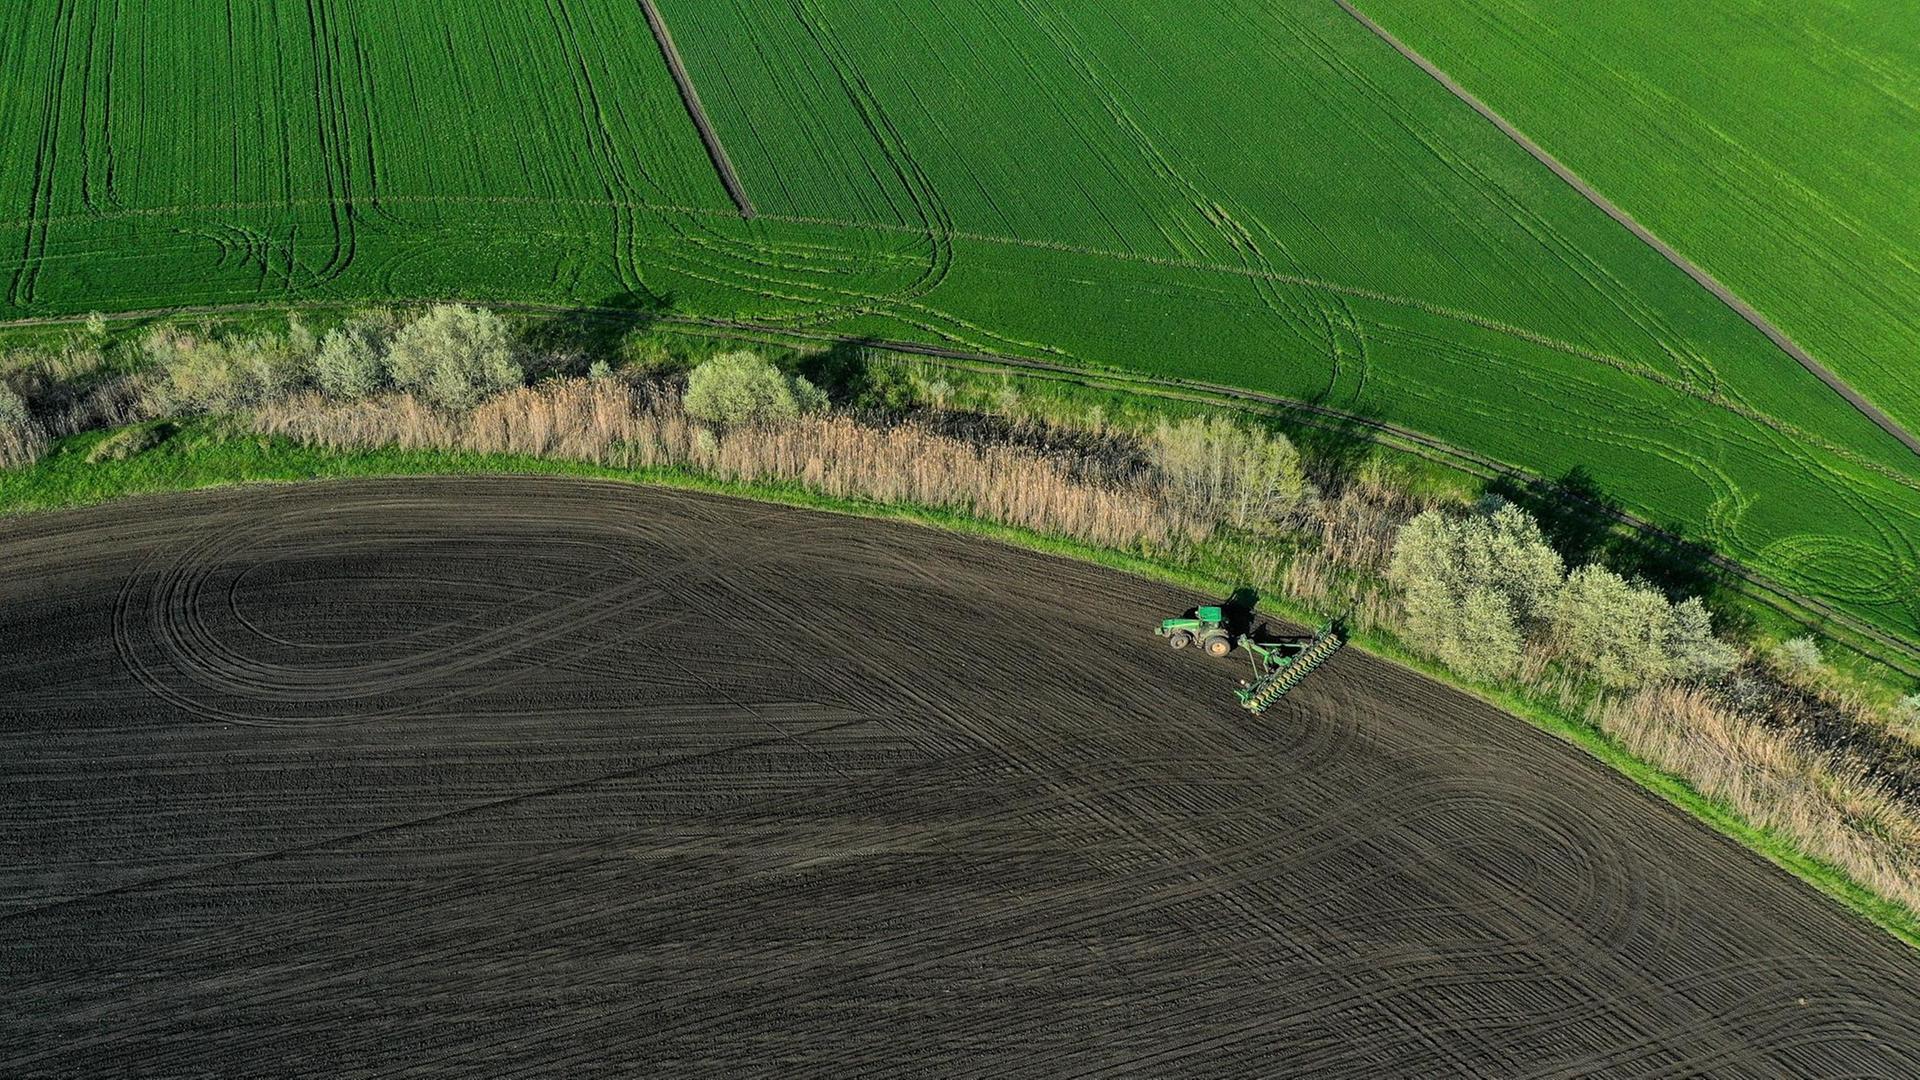 6531018 28.04.2021 An aerial view shows sugar beet sowing underway in fields of the Krasnodar region, in Russia. Vitaly Timkiv / Sputnik